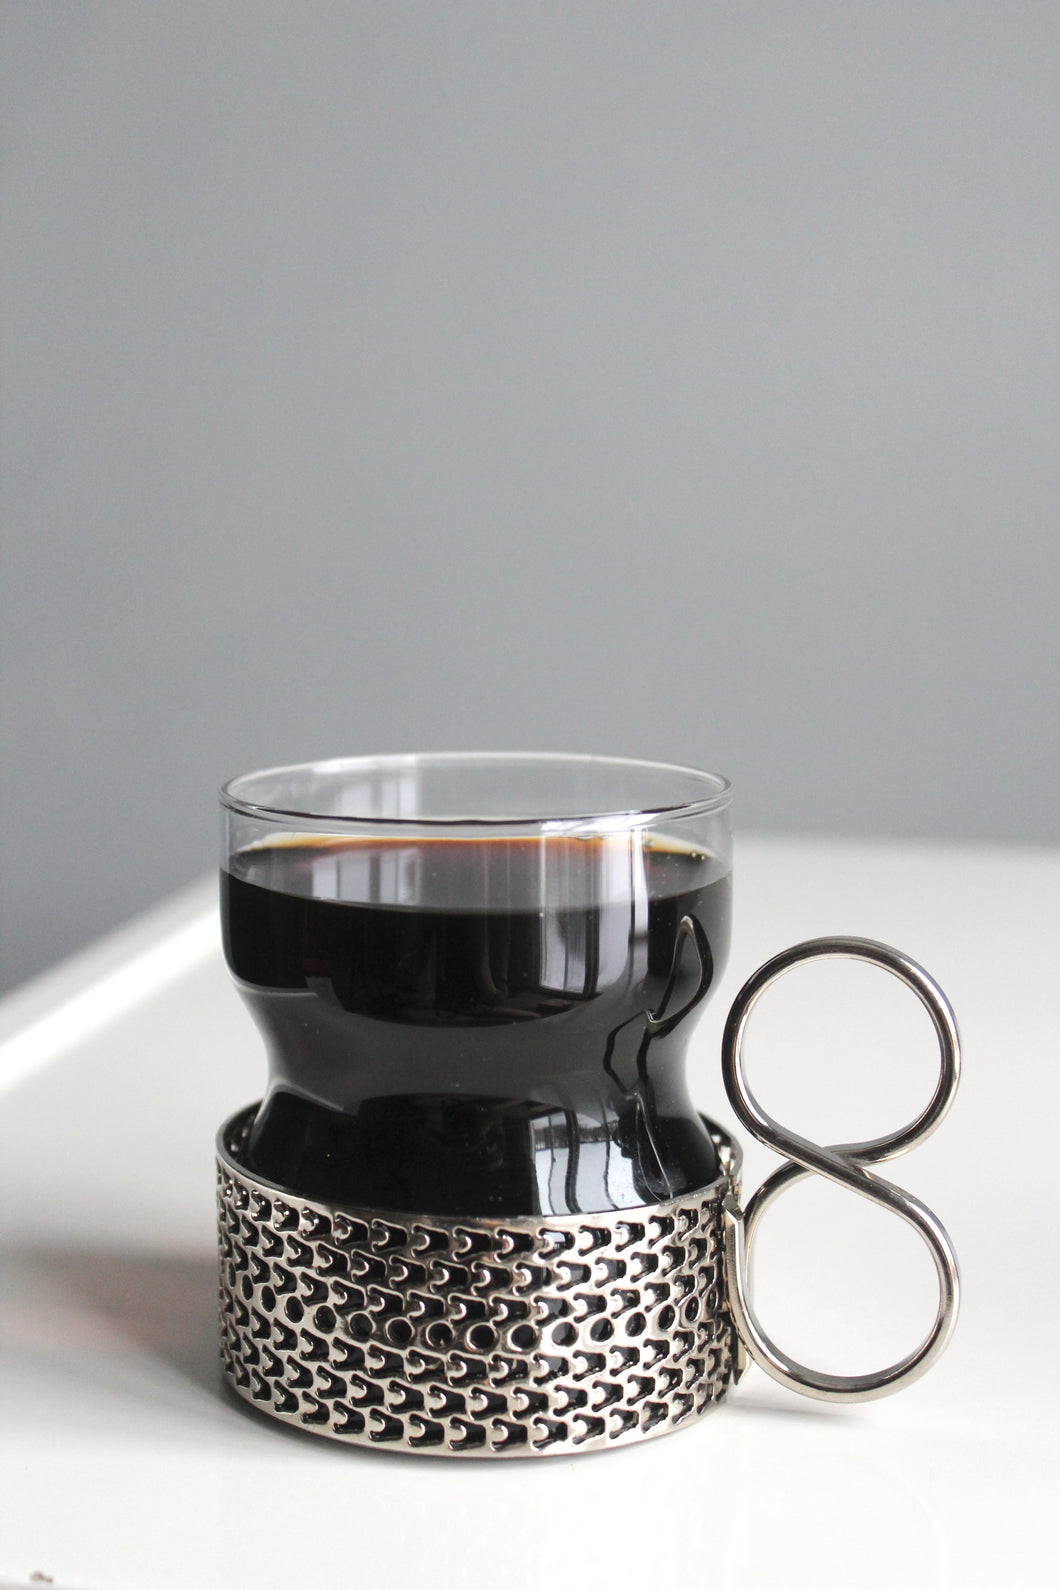 Finnish coffee cups